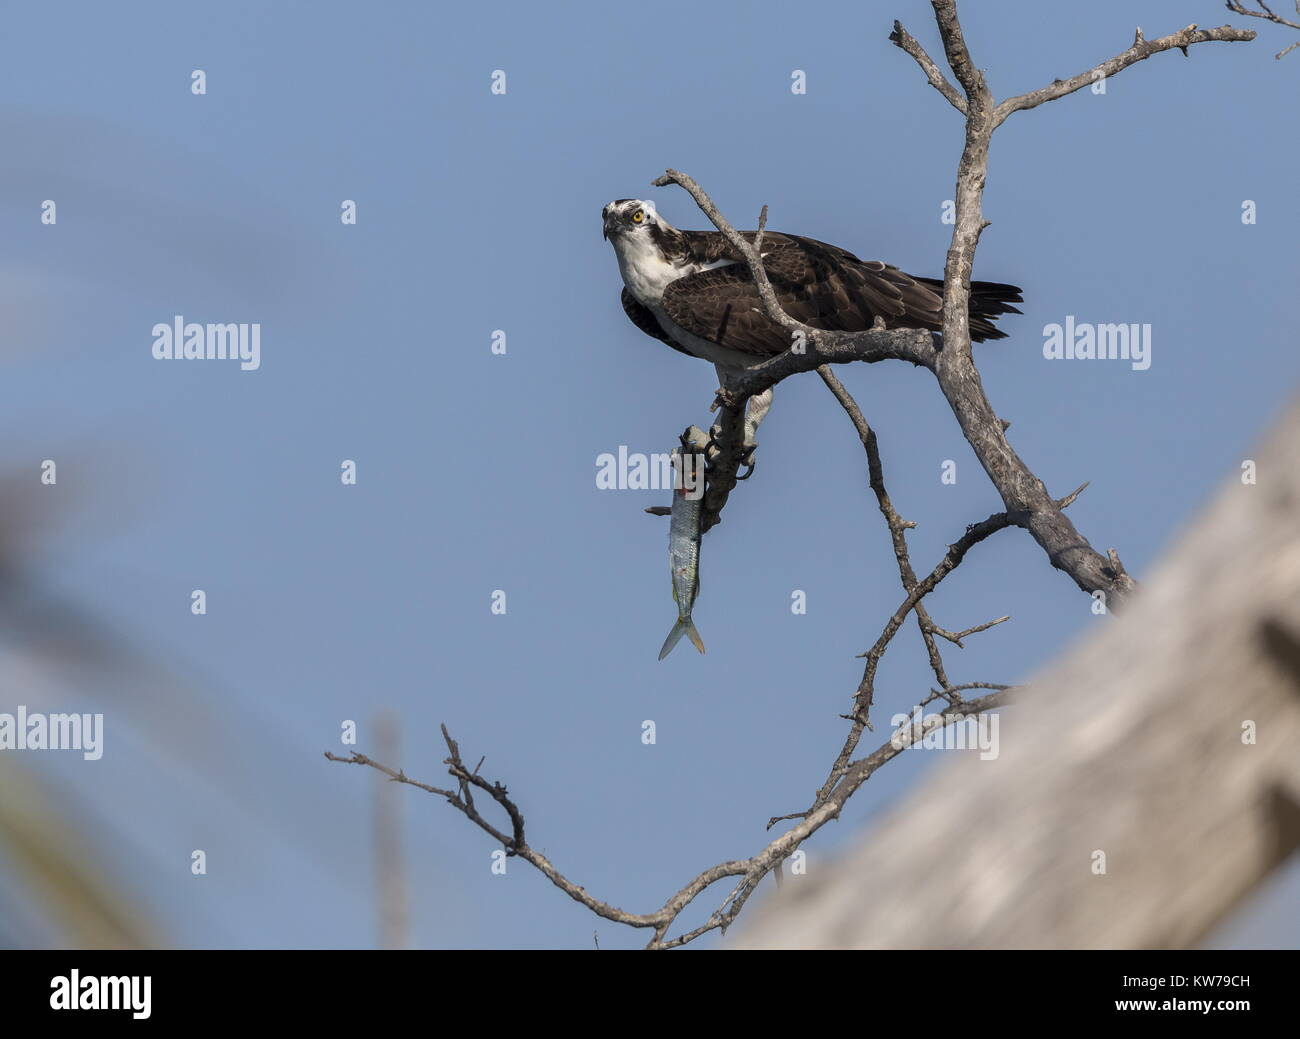 Osprey in tree with its prey - a long-beaked, fish, the ballyhoo, Hemiramphus sp. Florida. Stock Photo